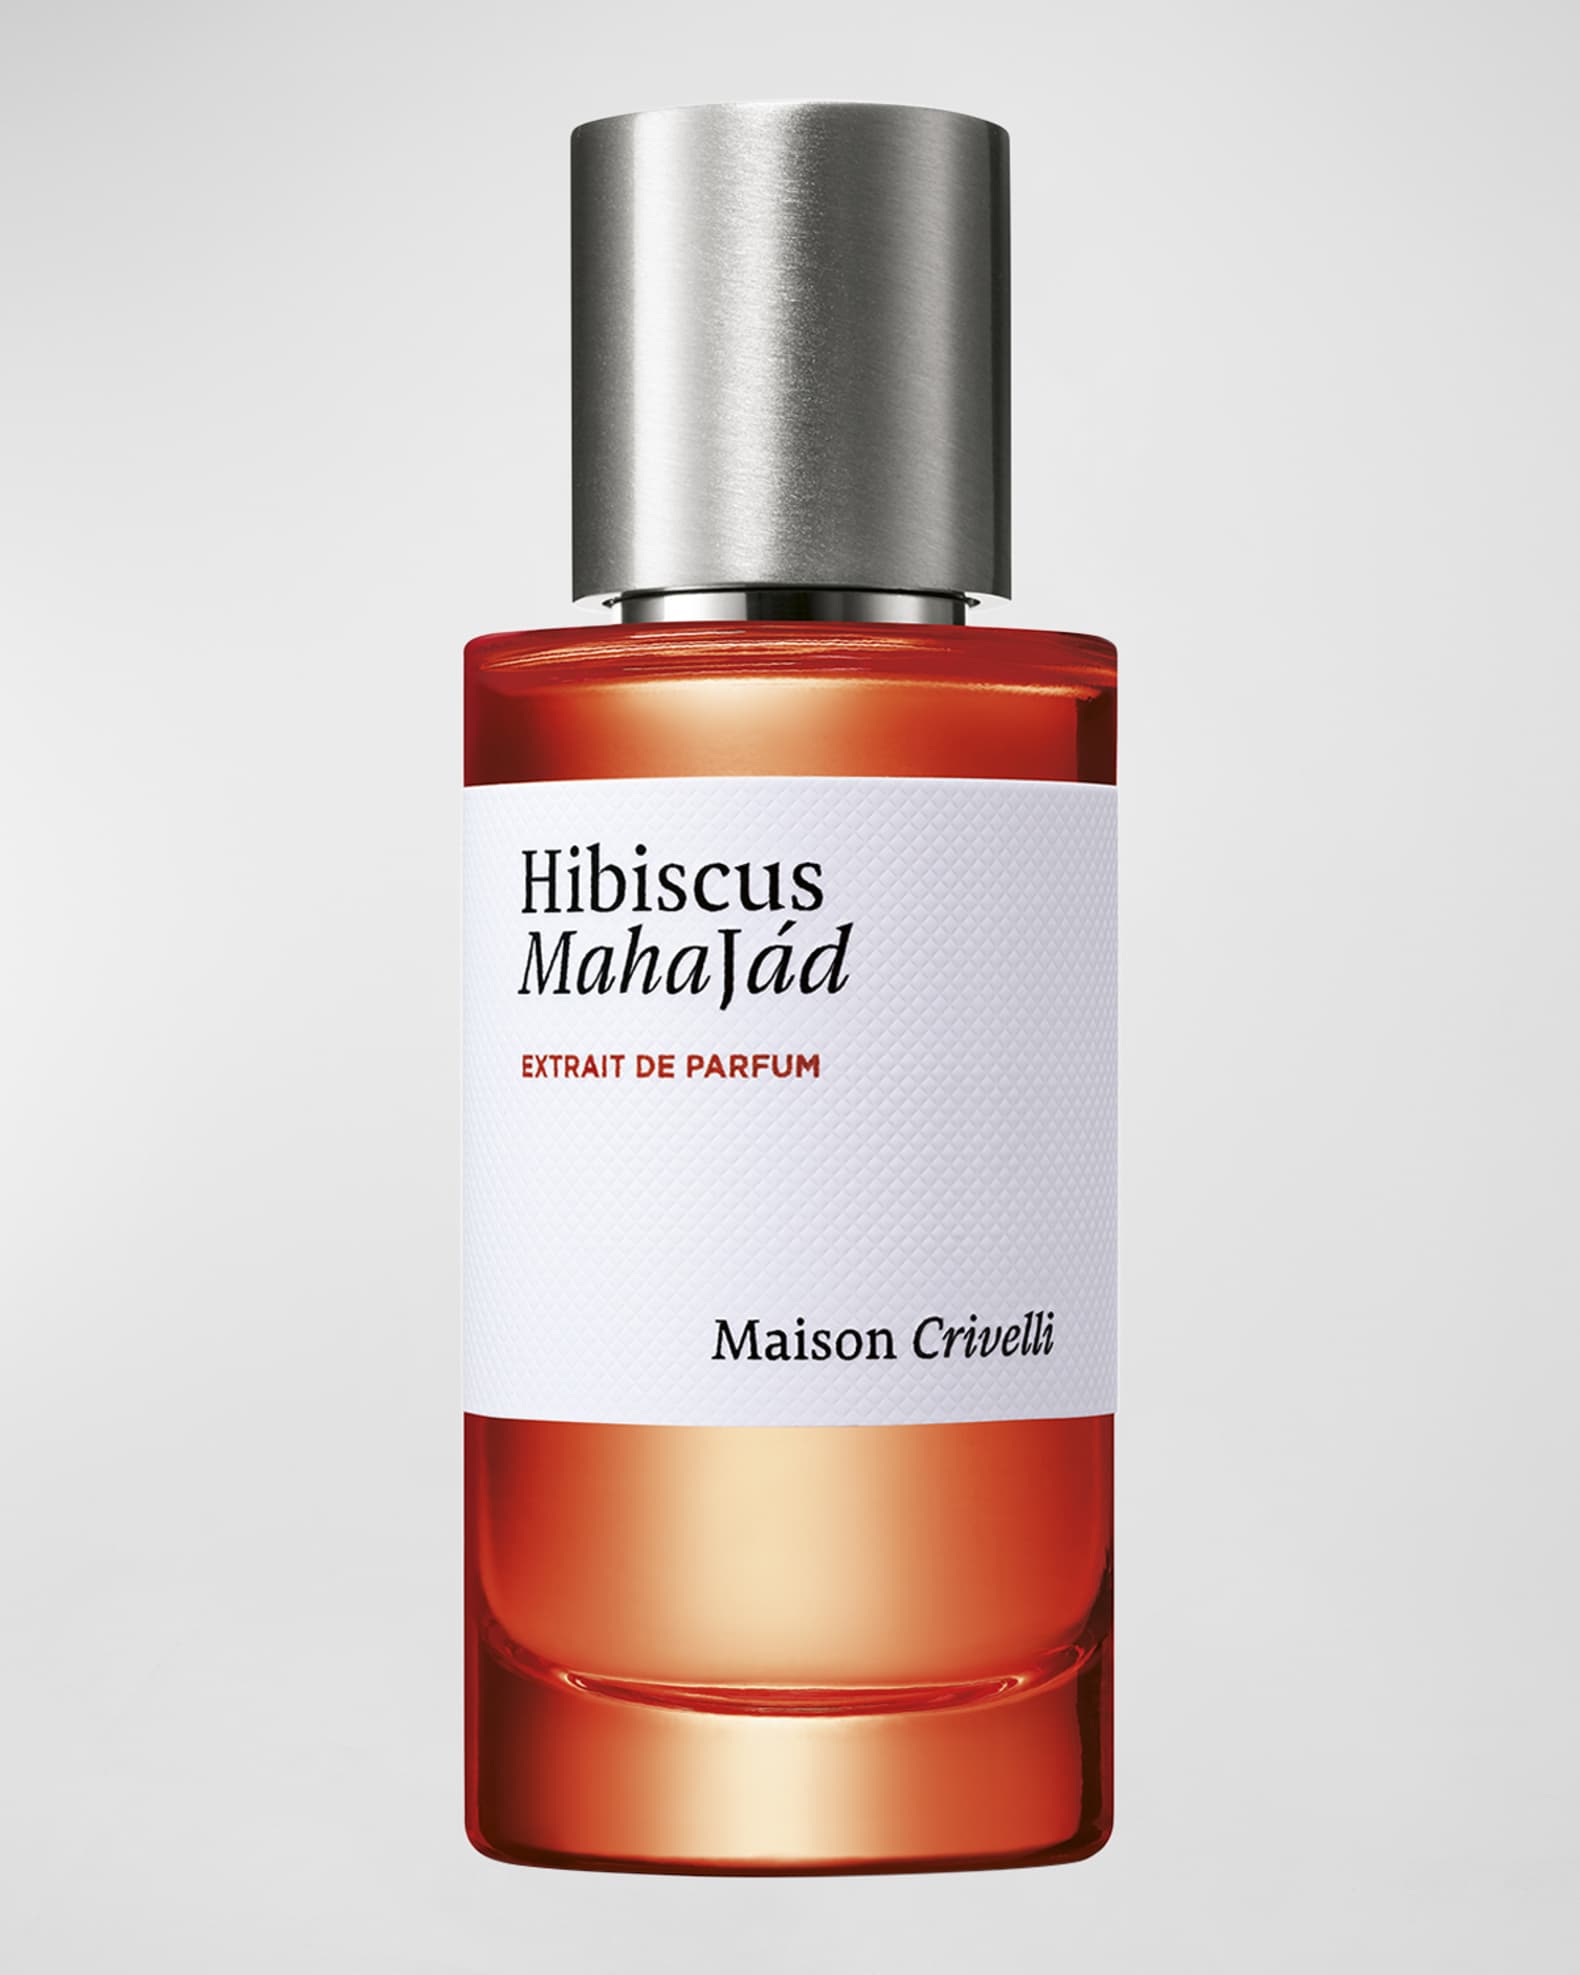 Hibiscus Mahajad Extrait de Parfum, 1.7 oz.